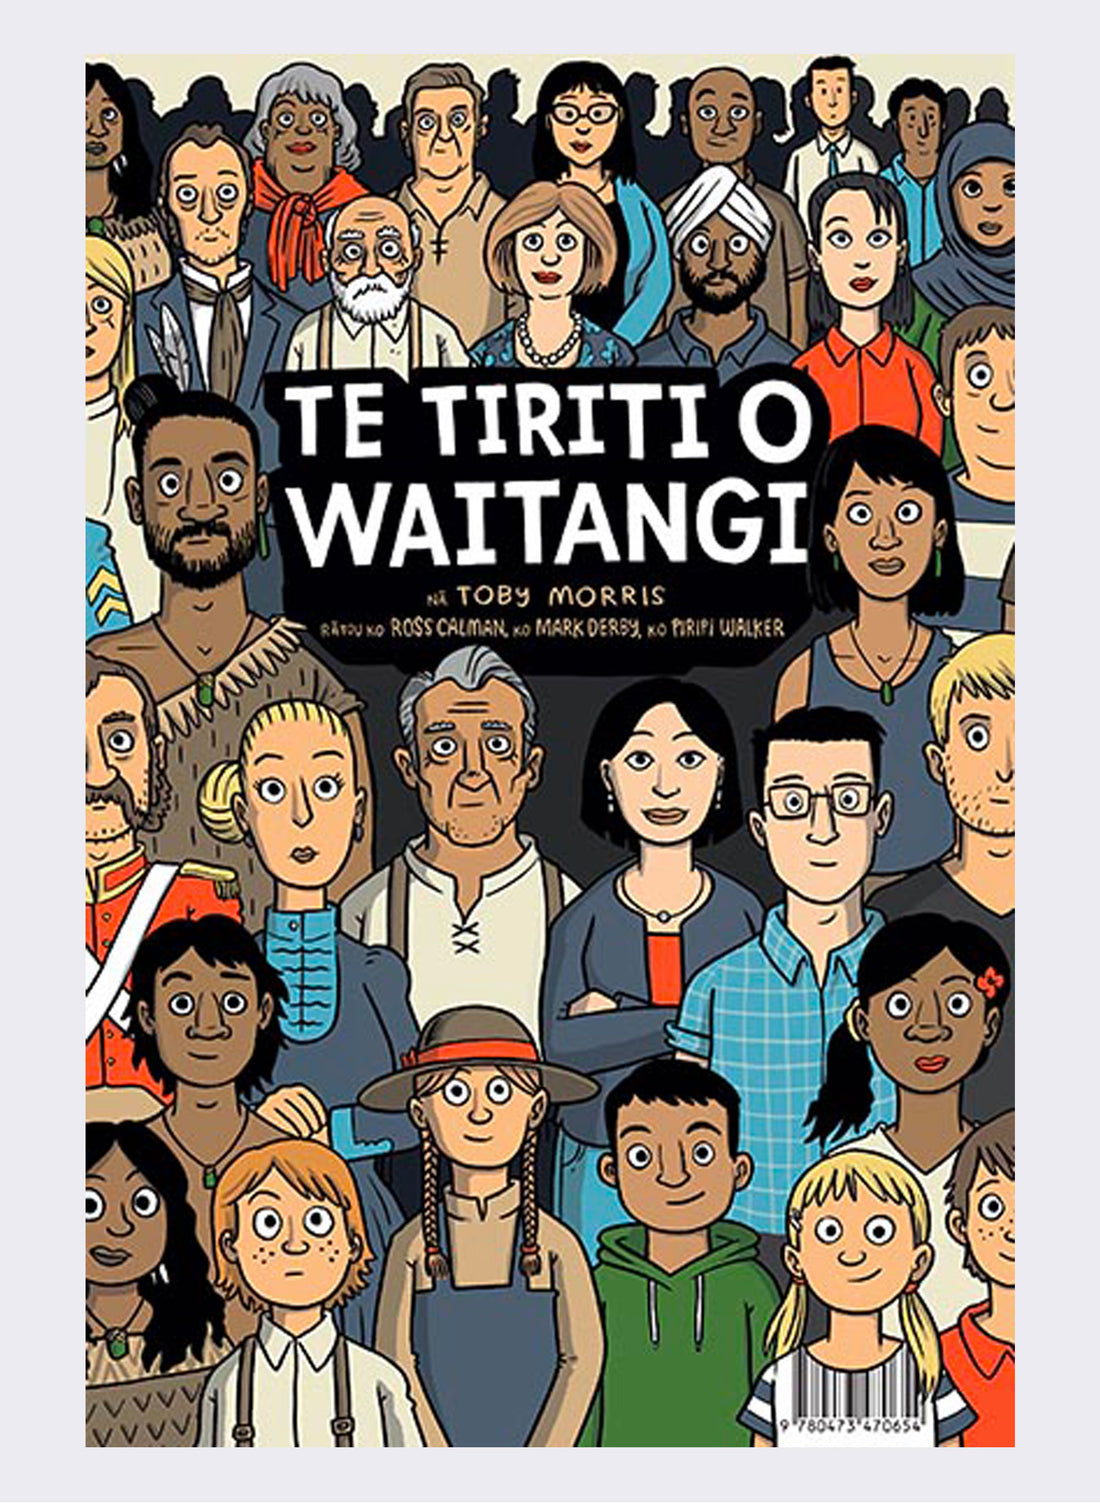 Te Tiriti o Waitangi by Ross Calman and Mark Derby